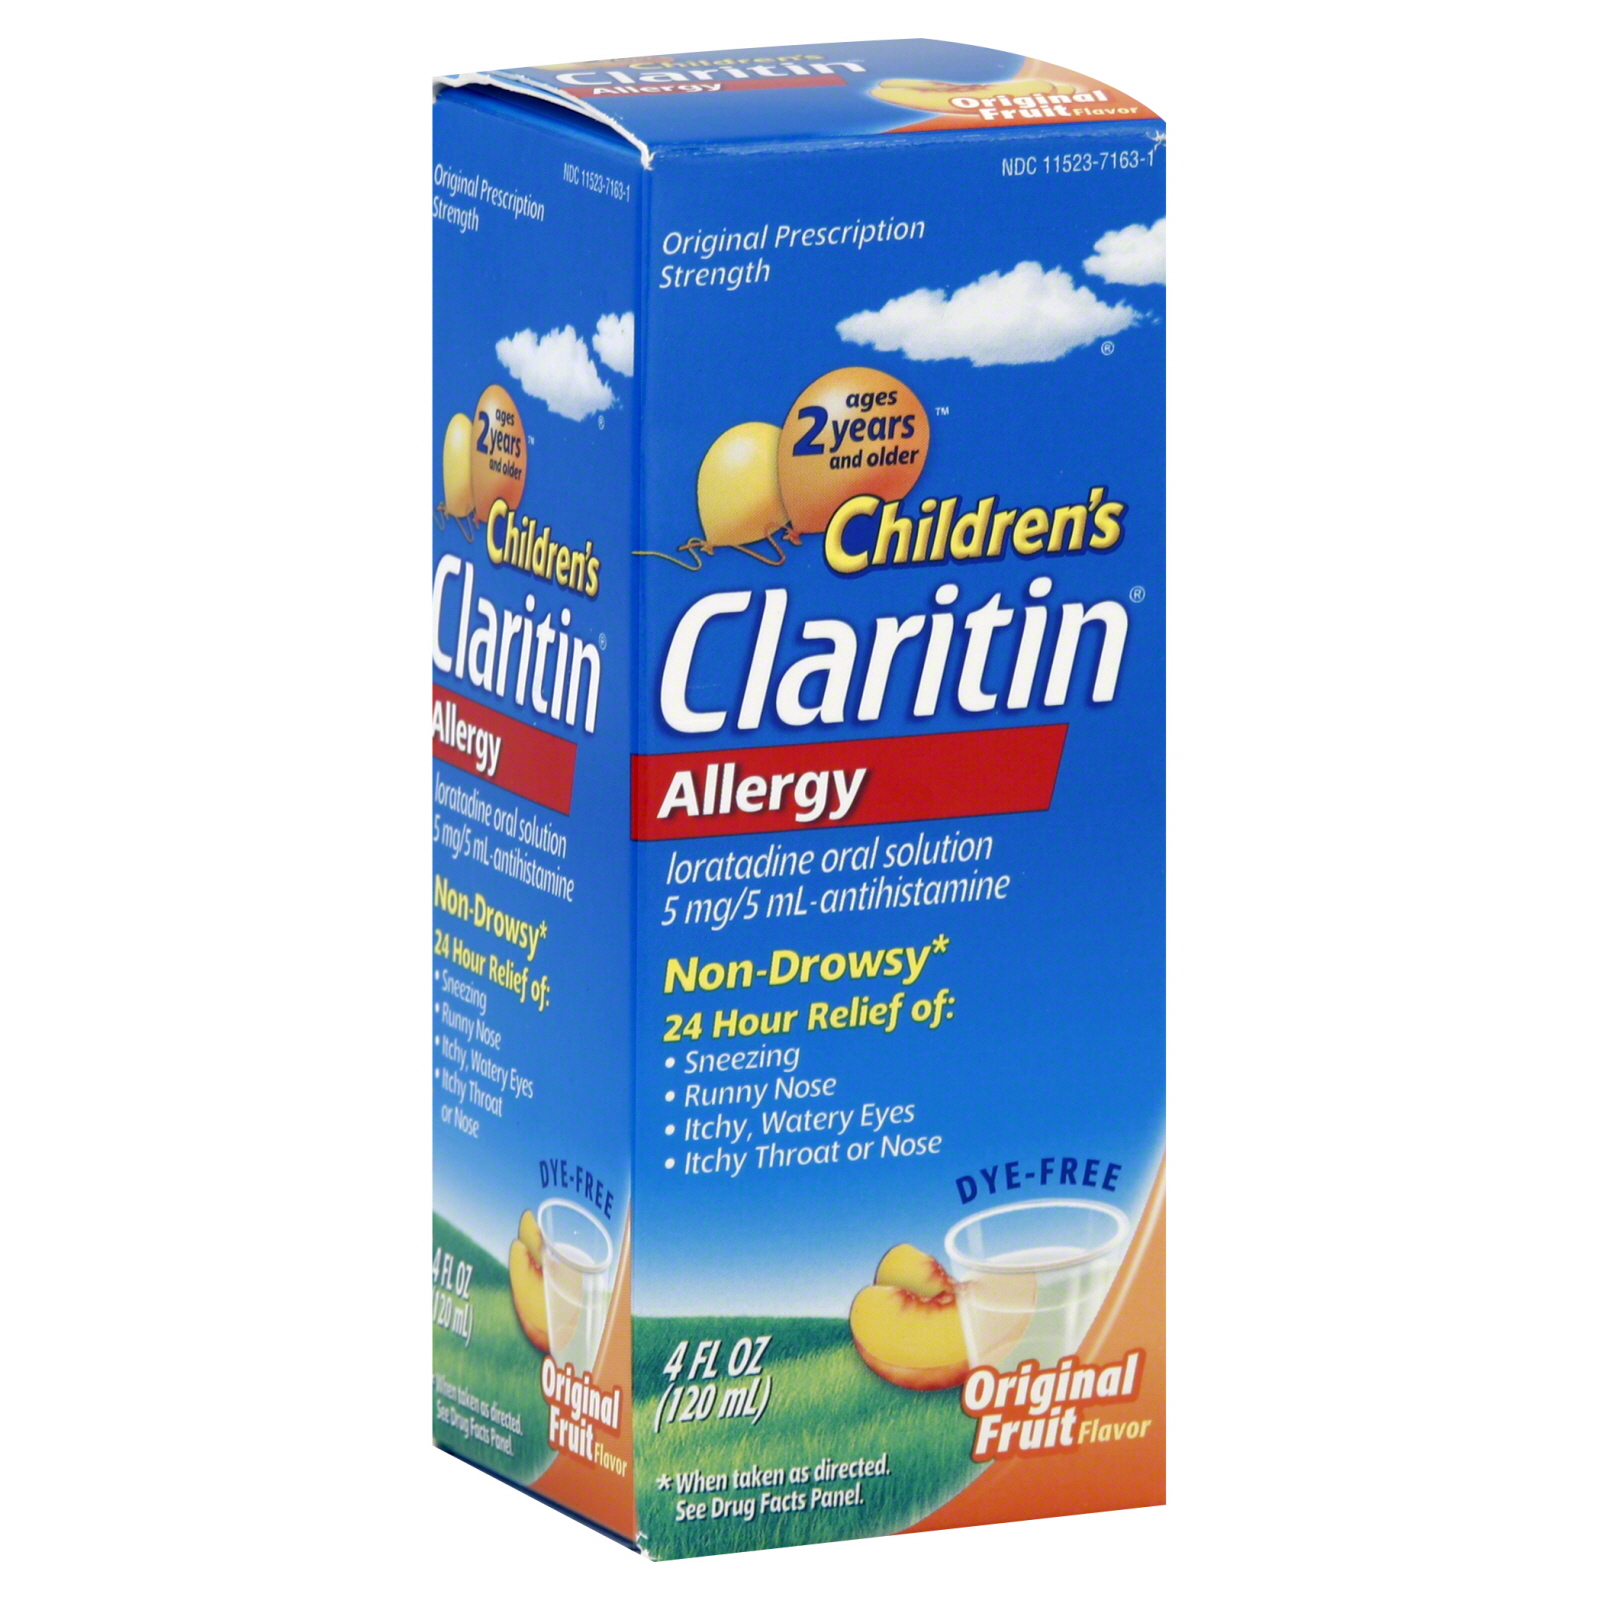 Claritin Children's Allergy, Original Fruit Flavor, 4 fl oz (120 ml)